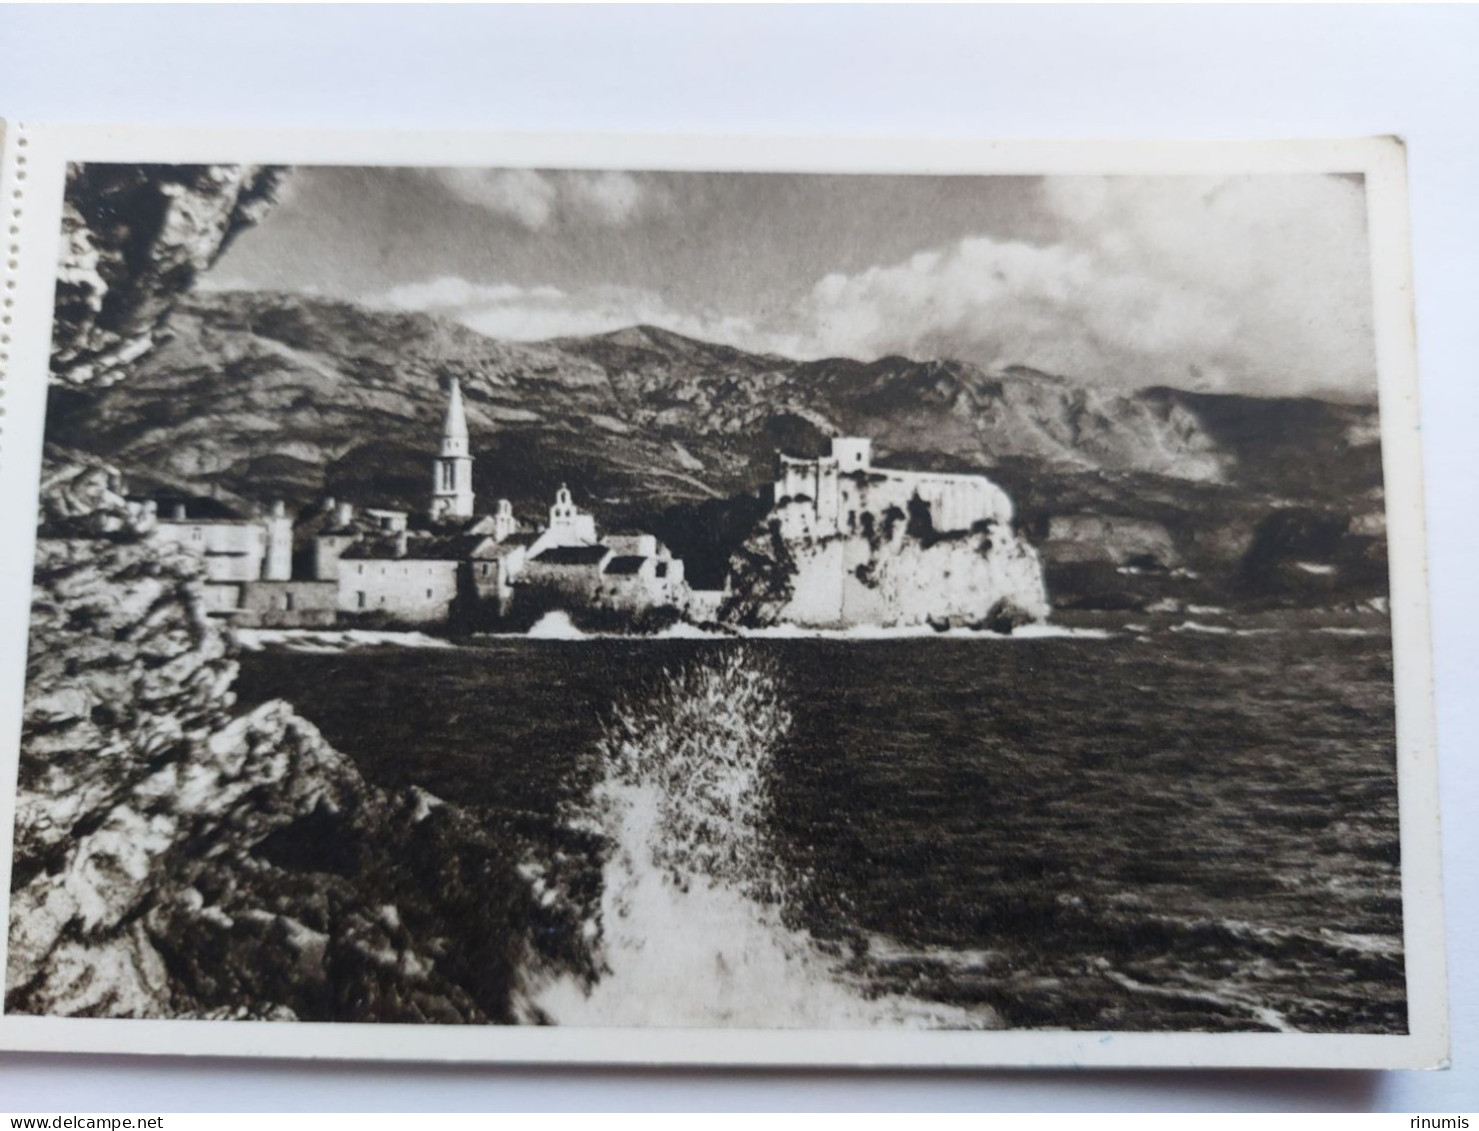 Budva 1950-60 Booklet W/8 Postcards Not Used - Montenegro